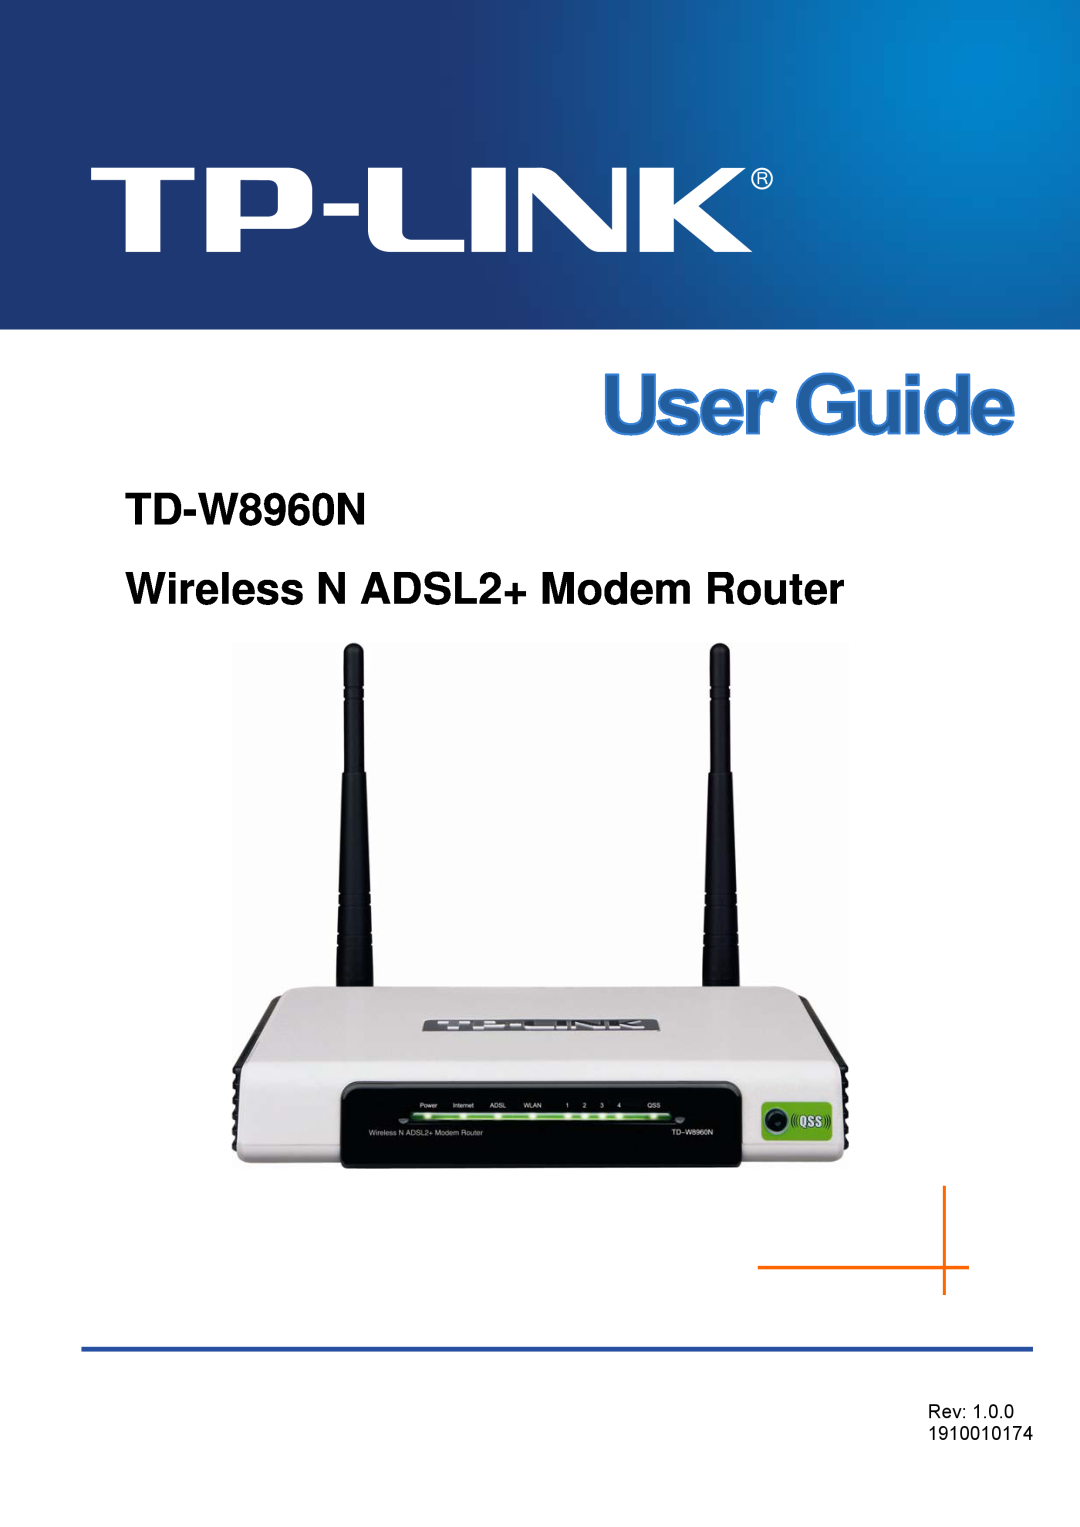 TP-Link manual TD-W8960N Wireless N ADSL2+ Modem Router, Rev 1.0.0 